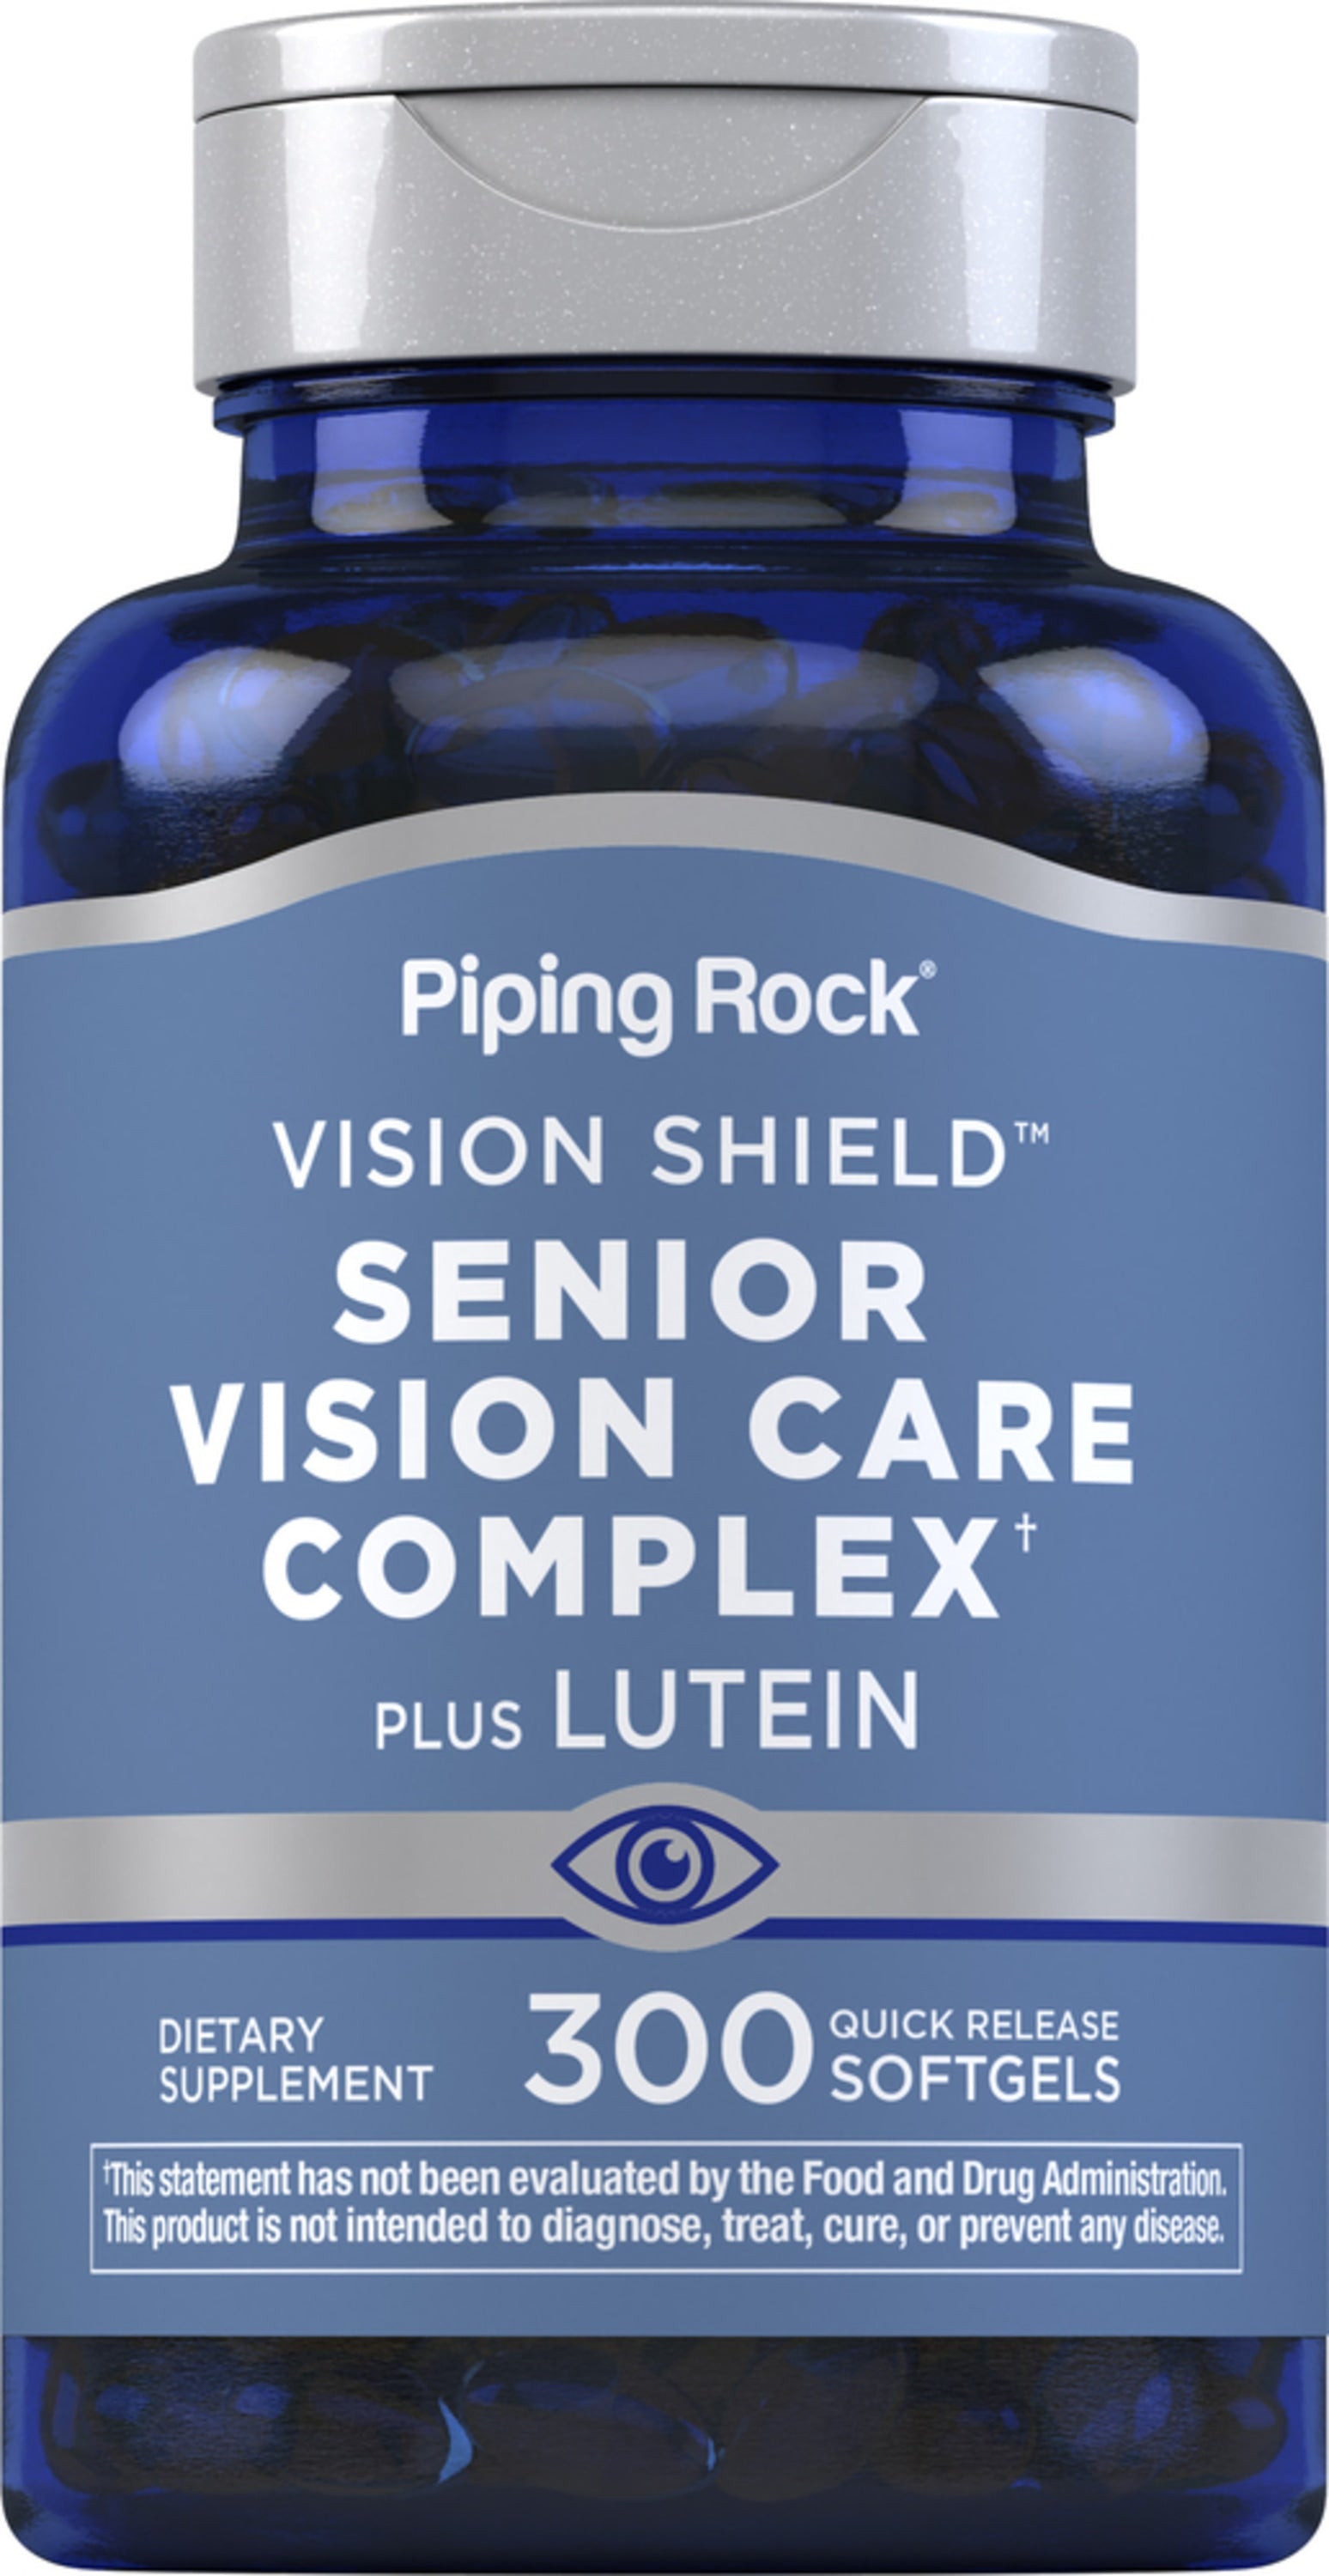 Senior Vision Care Complex, 300 Quick Release Softgels